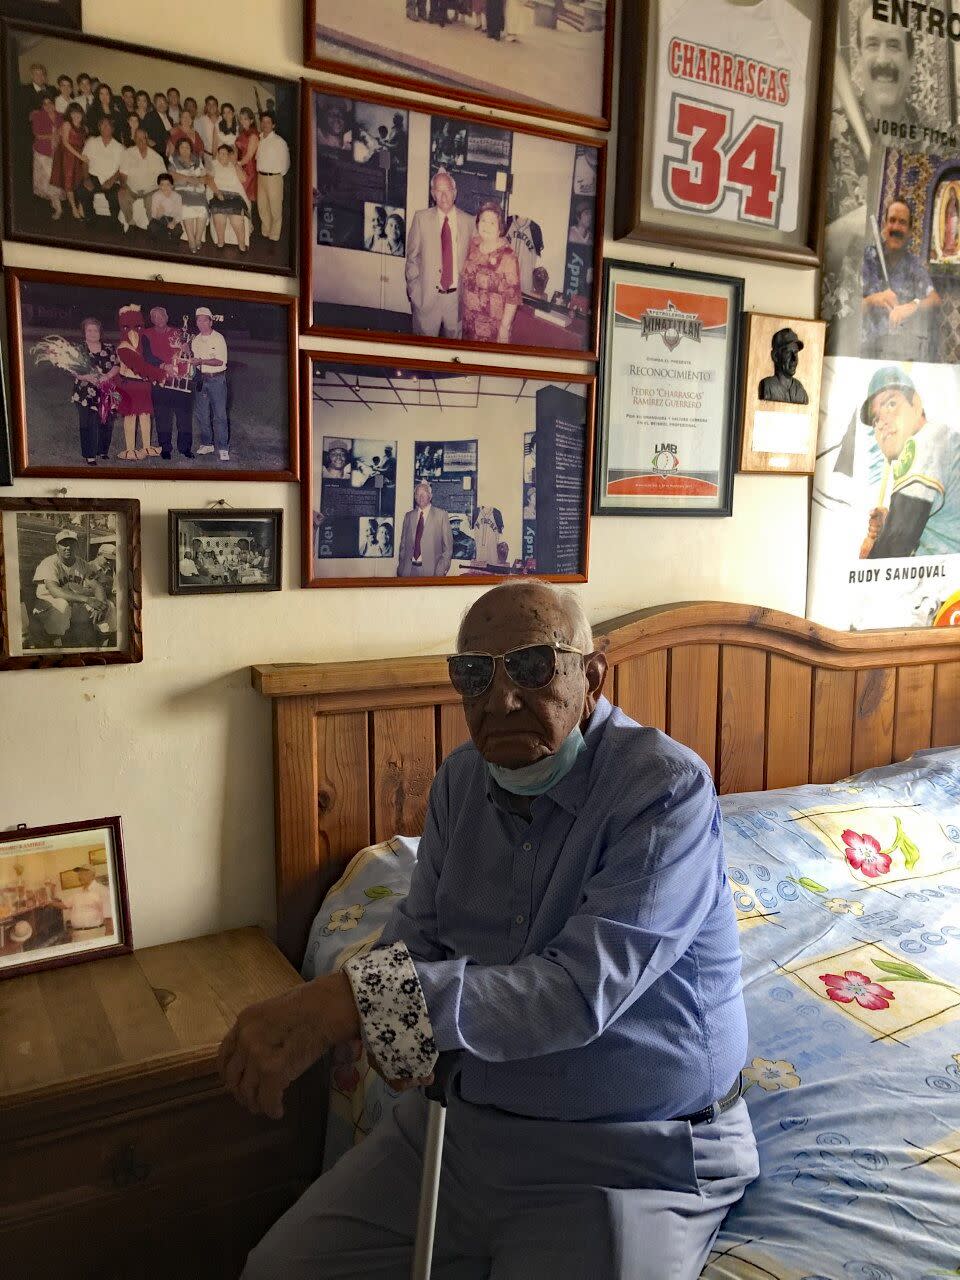 Pedro "Charrascas" Ramírez sits in his home next to photos of his family and baseball memorabilia. 2022.